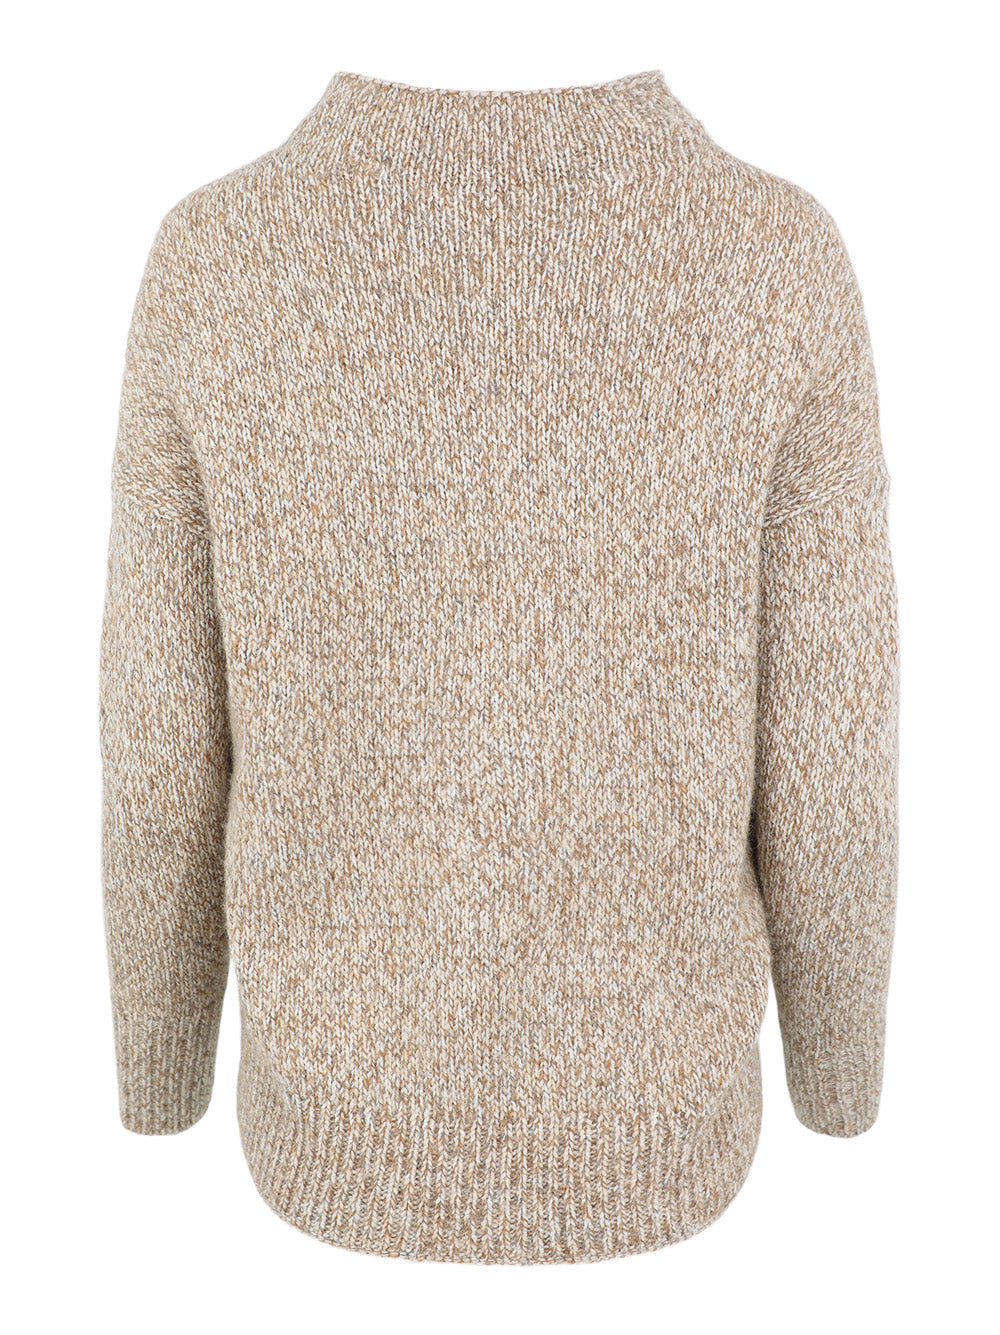 Vince Multi Tweed Funnel Neck Sweater in Camel Marl